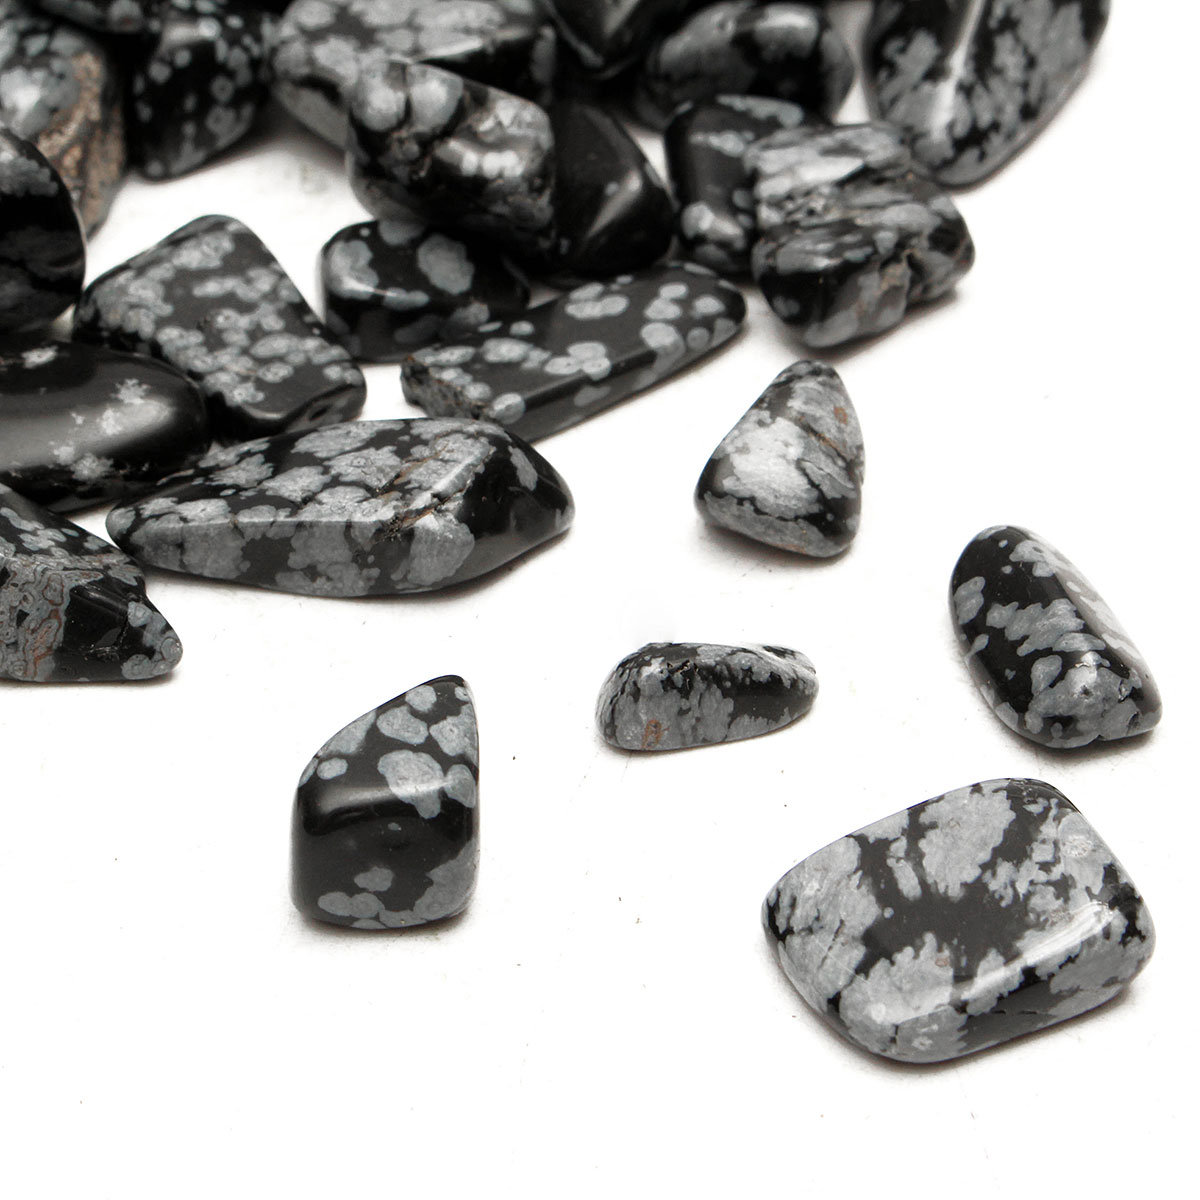 100g Diy Crystal Alabaster Gravel Bulk Tumbled Snowflake Obsidian Stones Polished Crystal